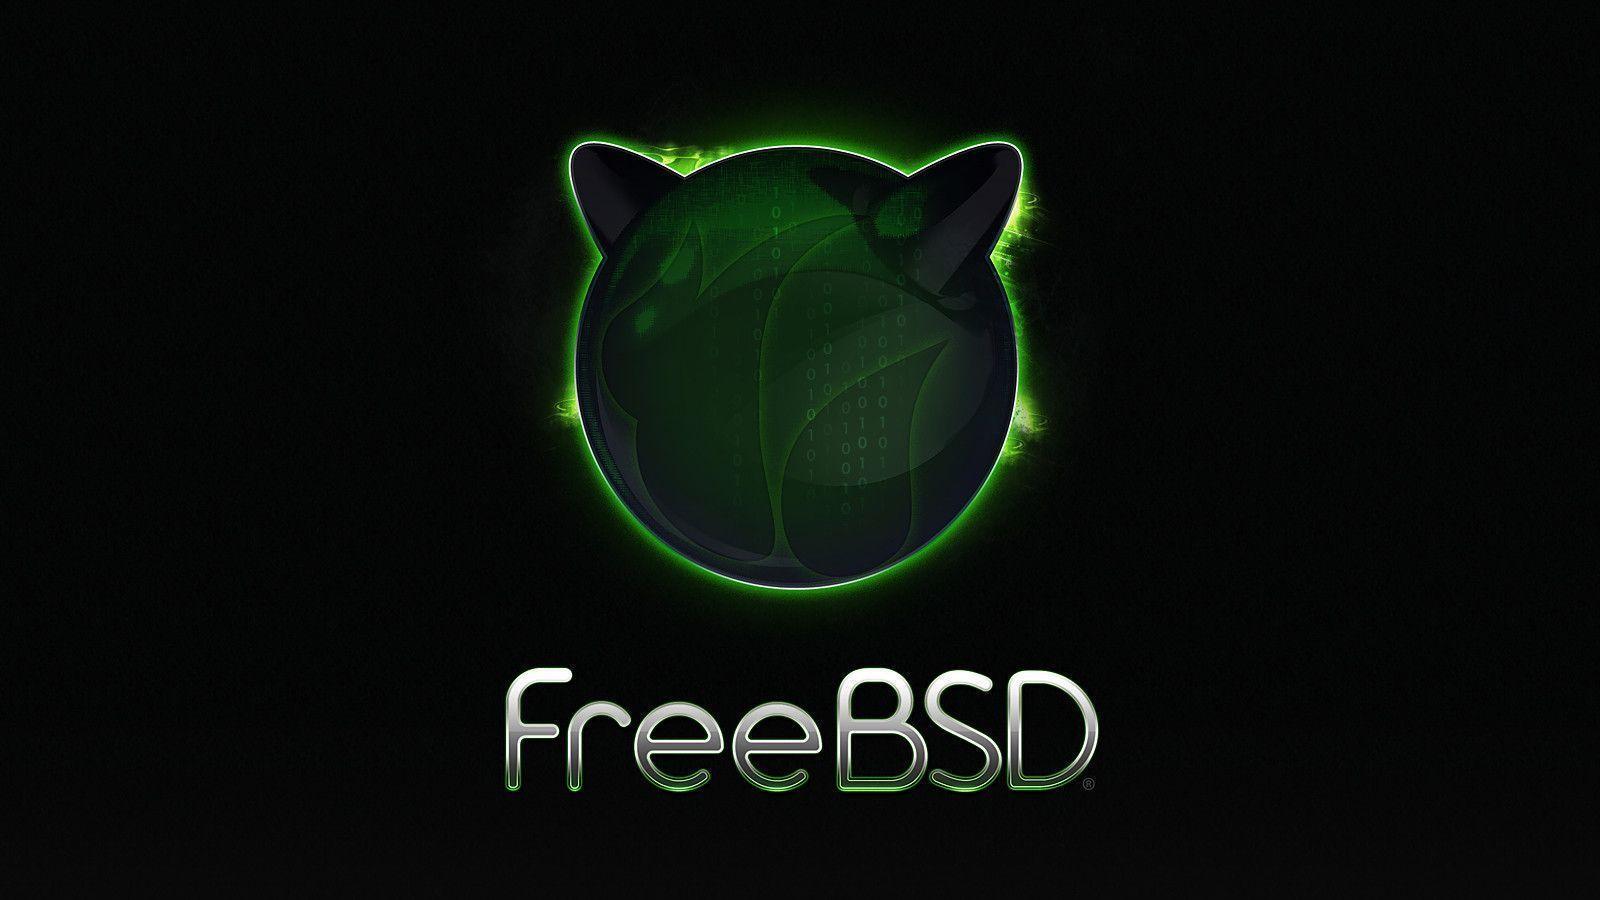 FreeBSD Wallpaper. (1600x900)